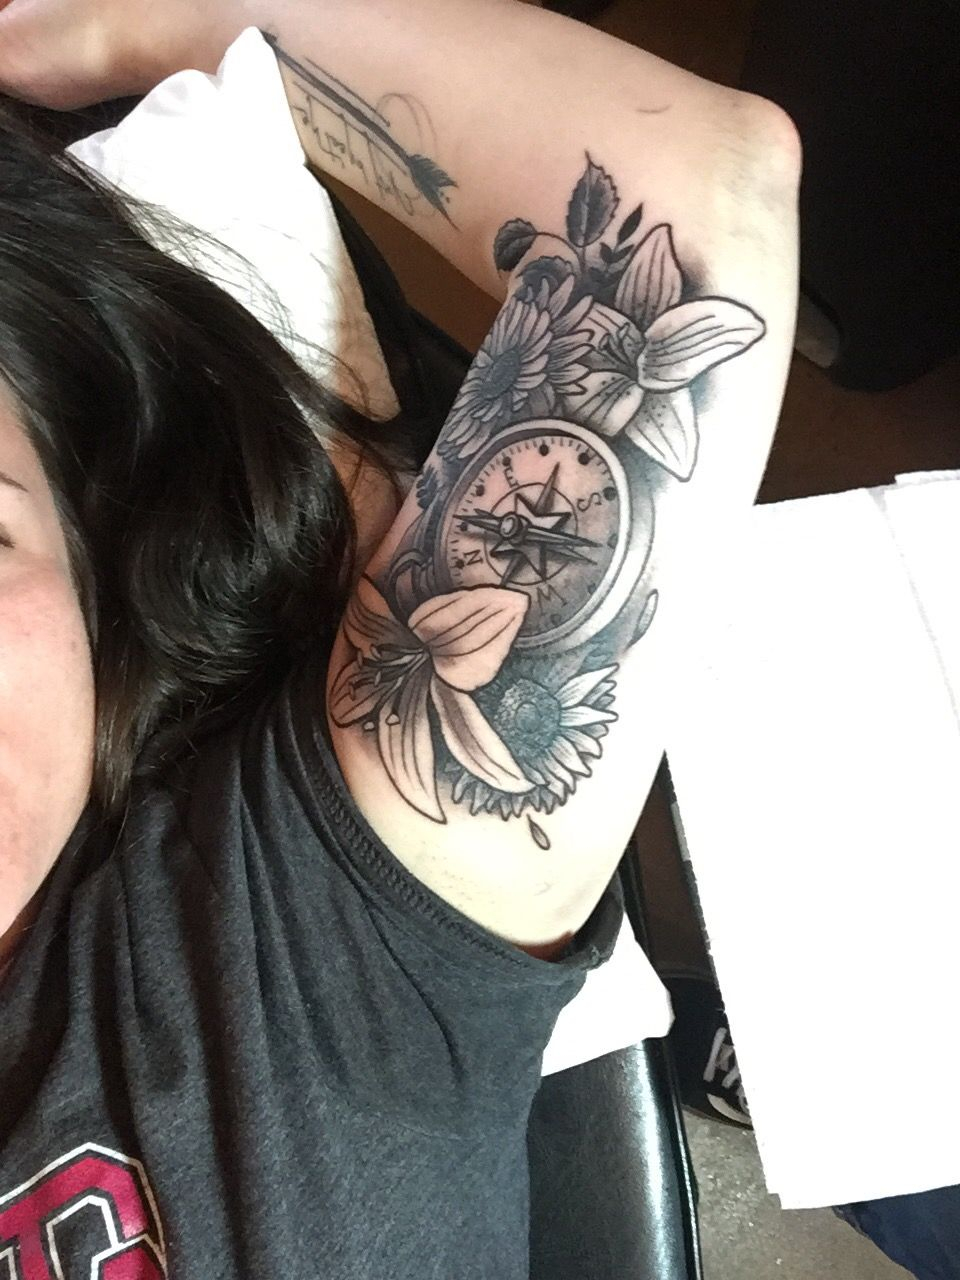 Inside Arm Tattoo Girl Arm Tattoo Sites